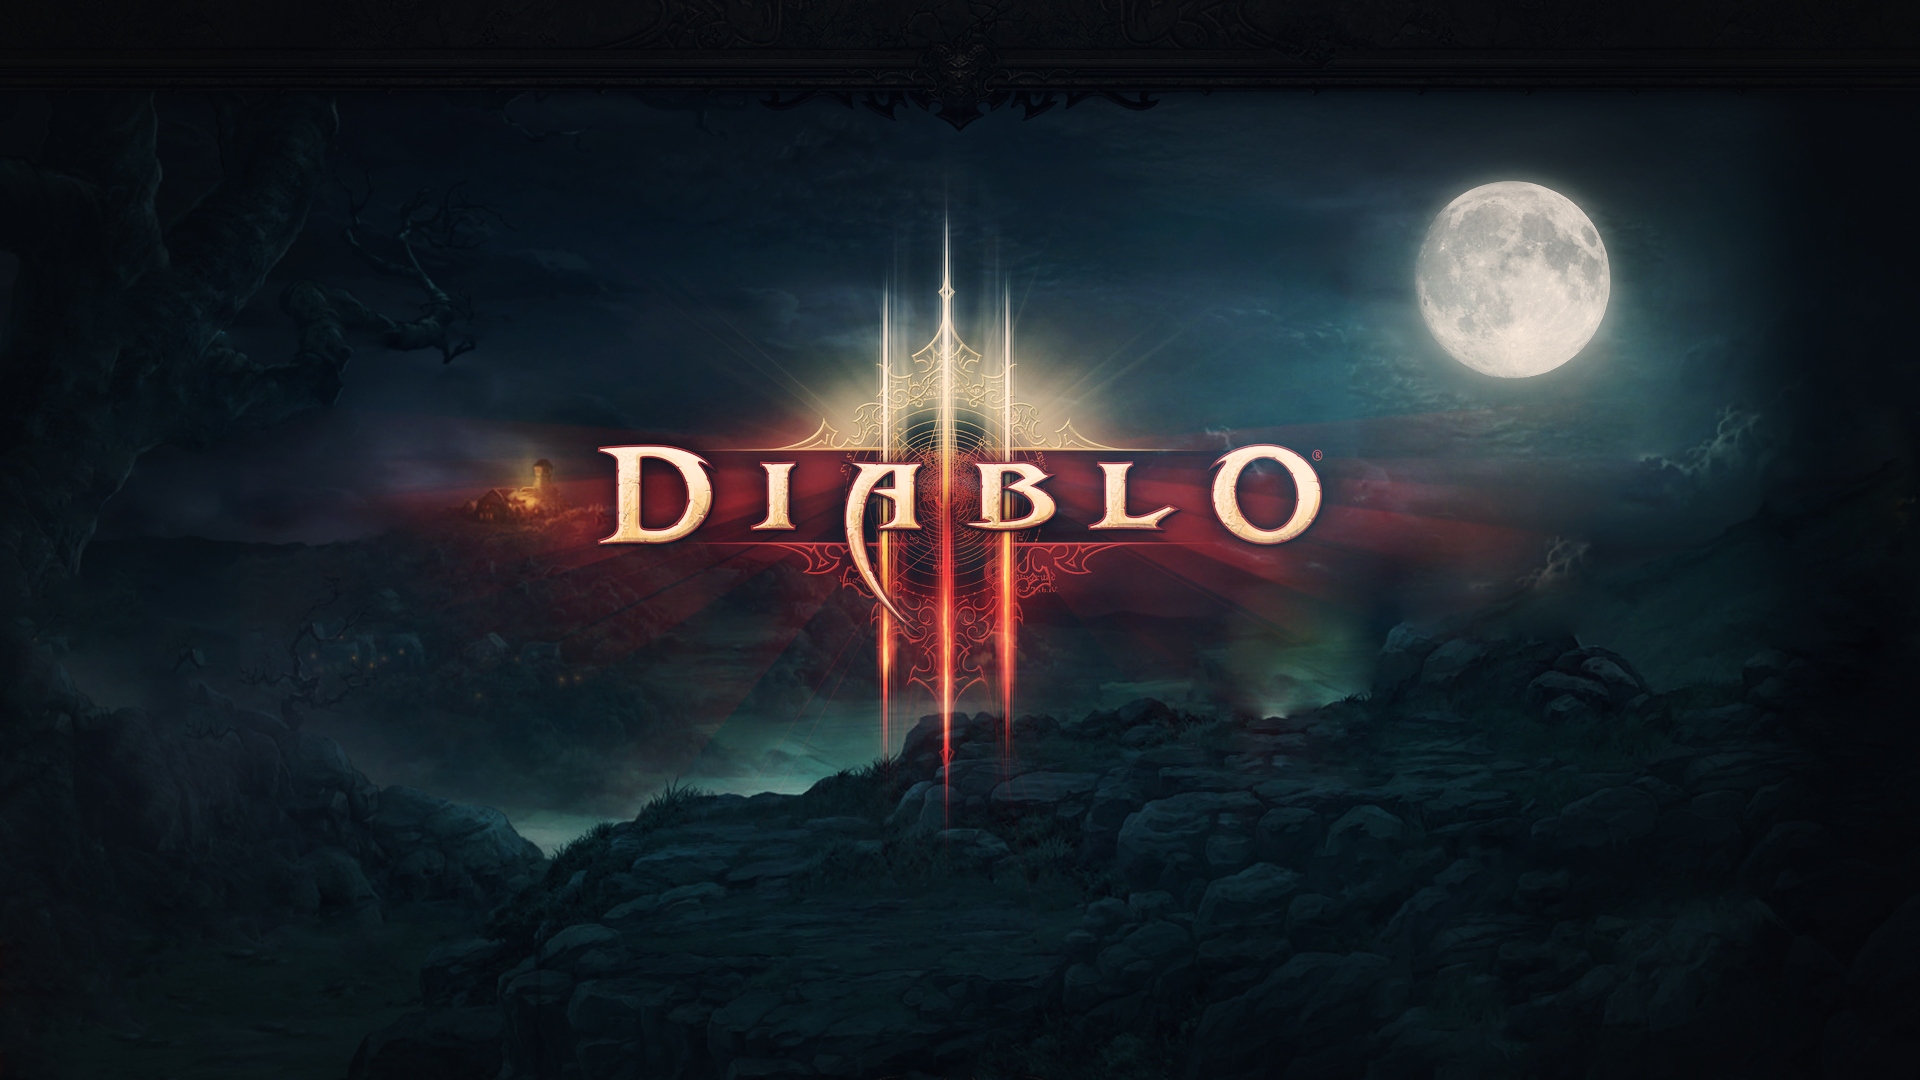 Full HD Diablo Iii Wallpaper Collection